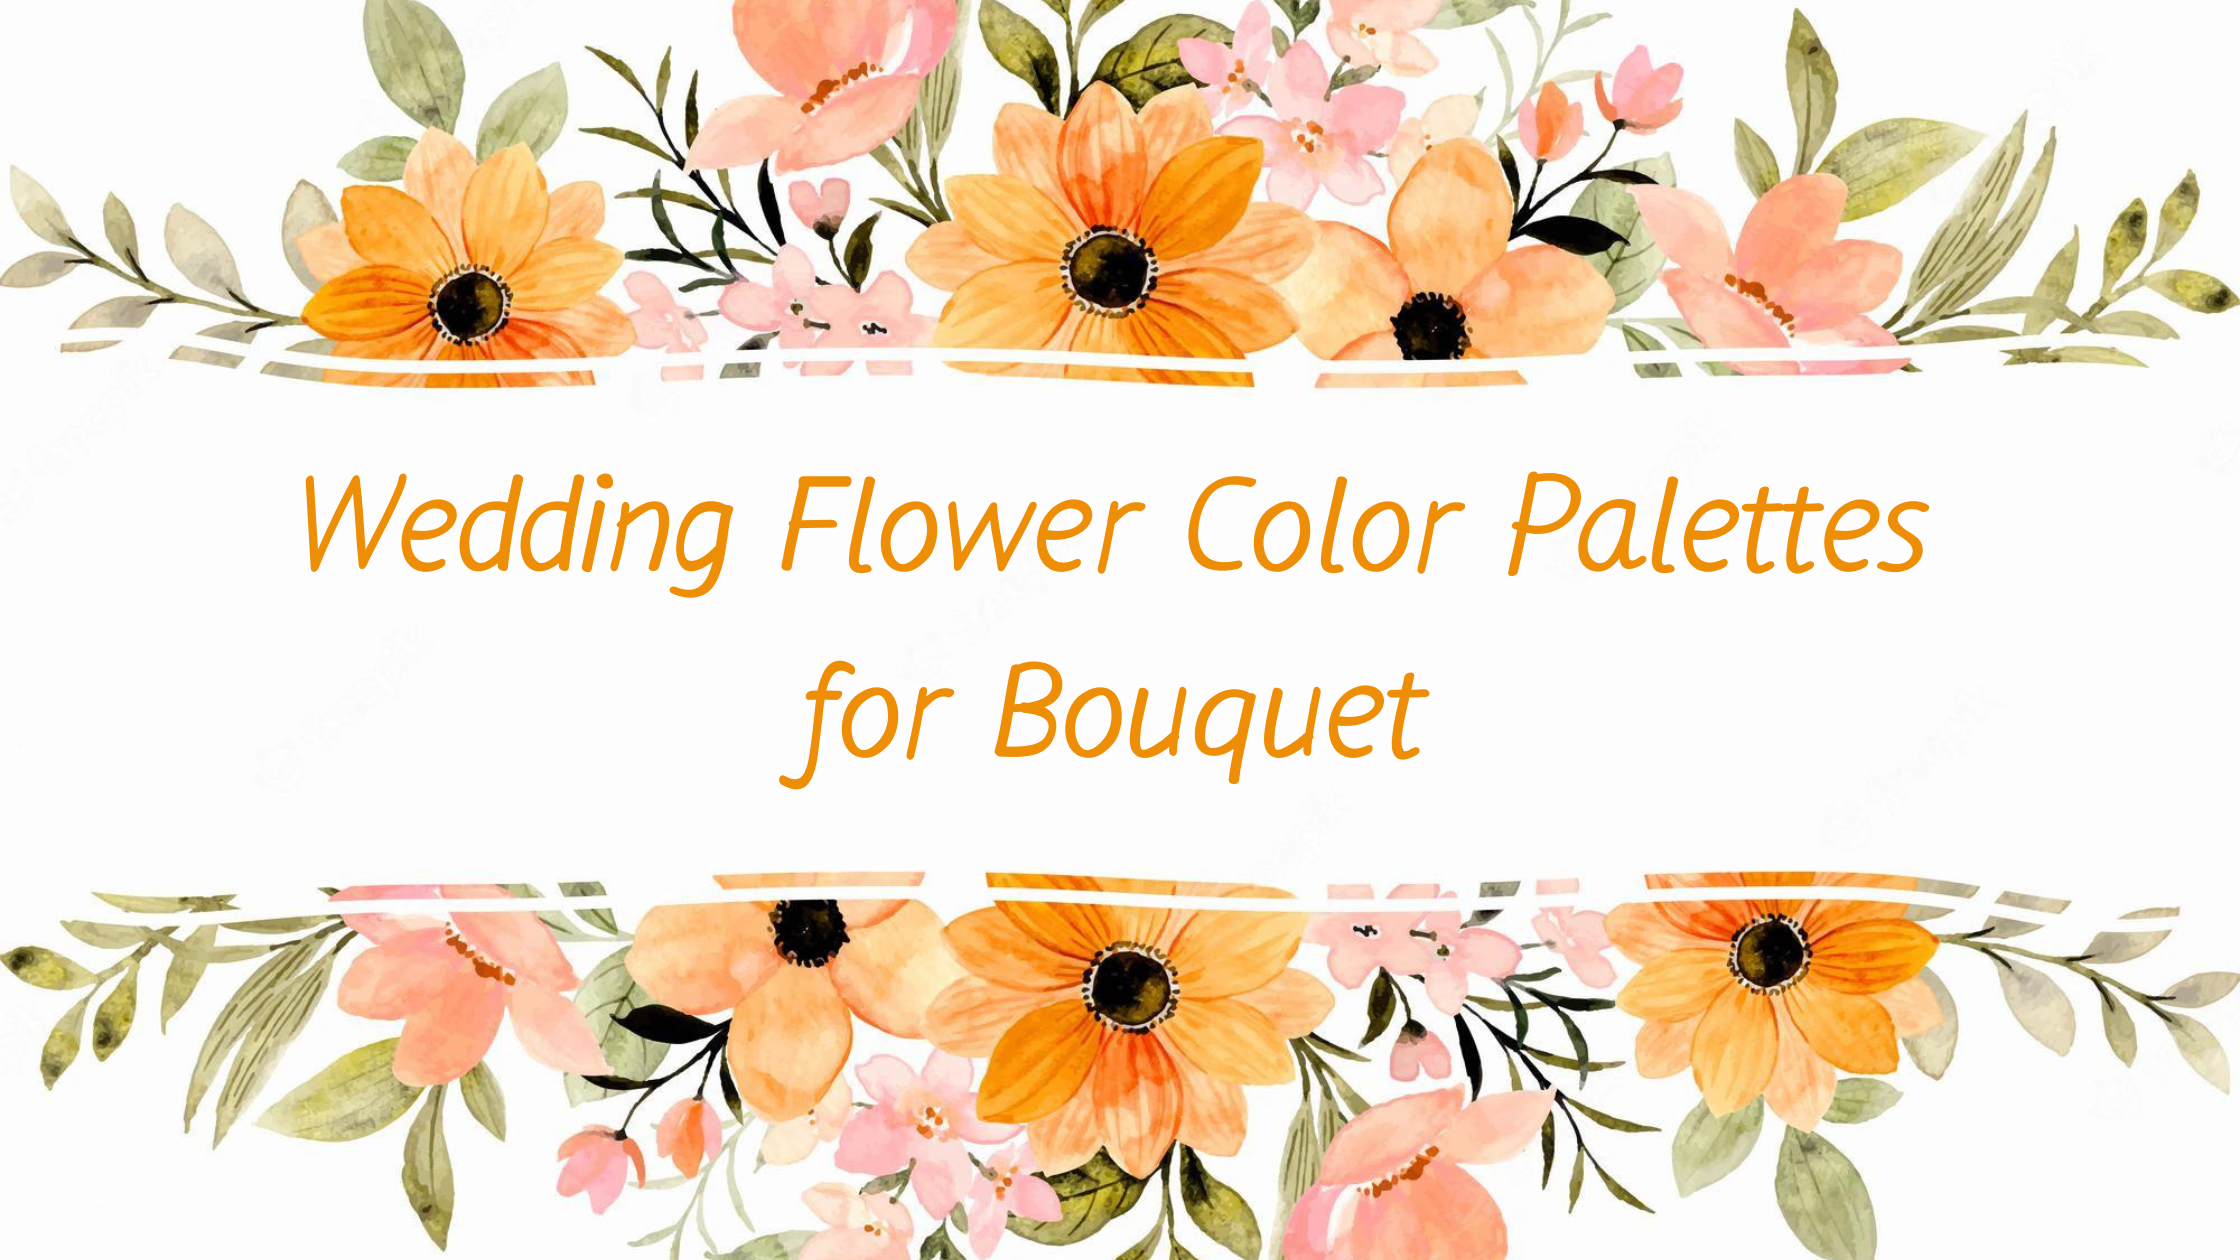 Best Wedding Flower Color Palettes for Bouquets